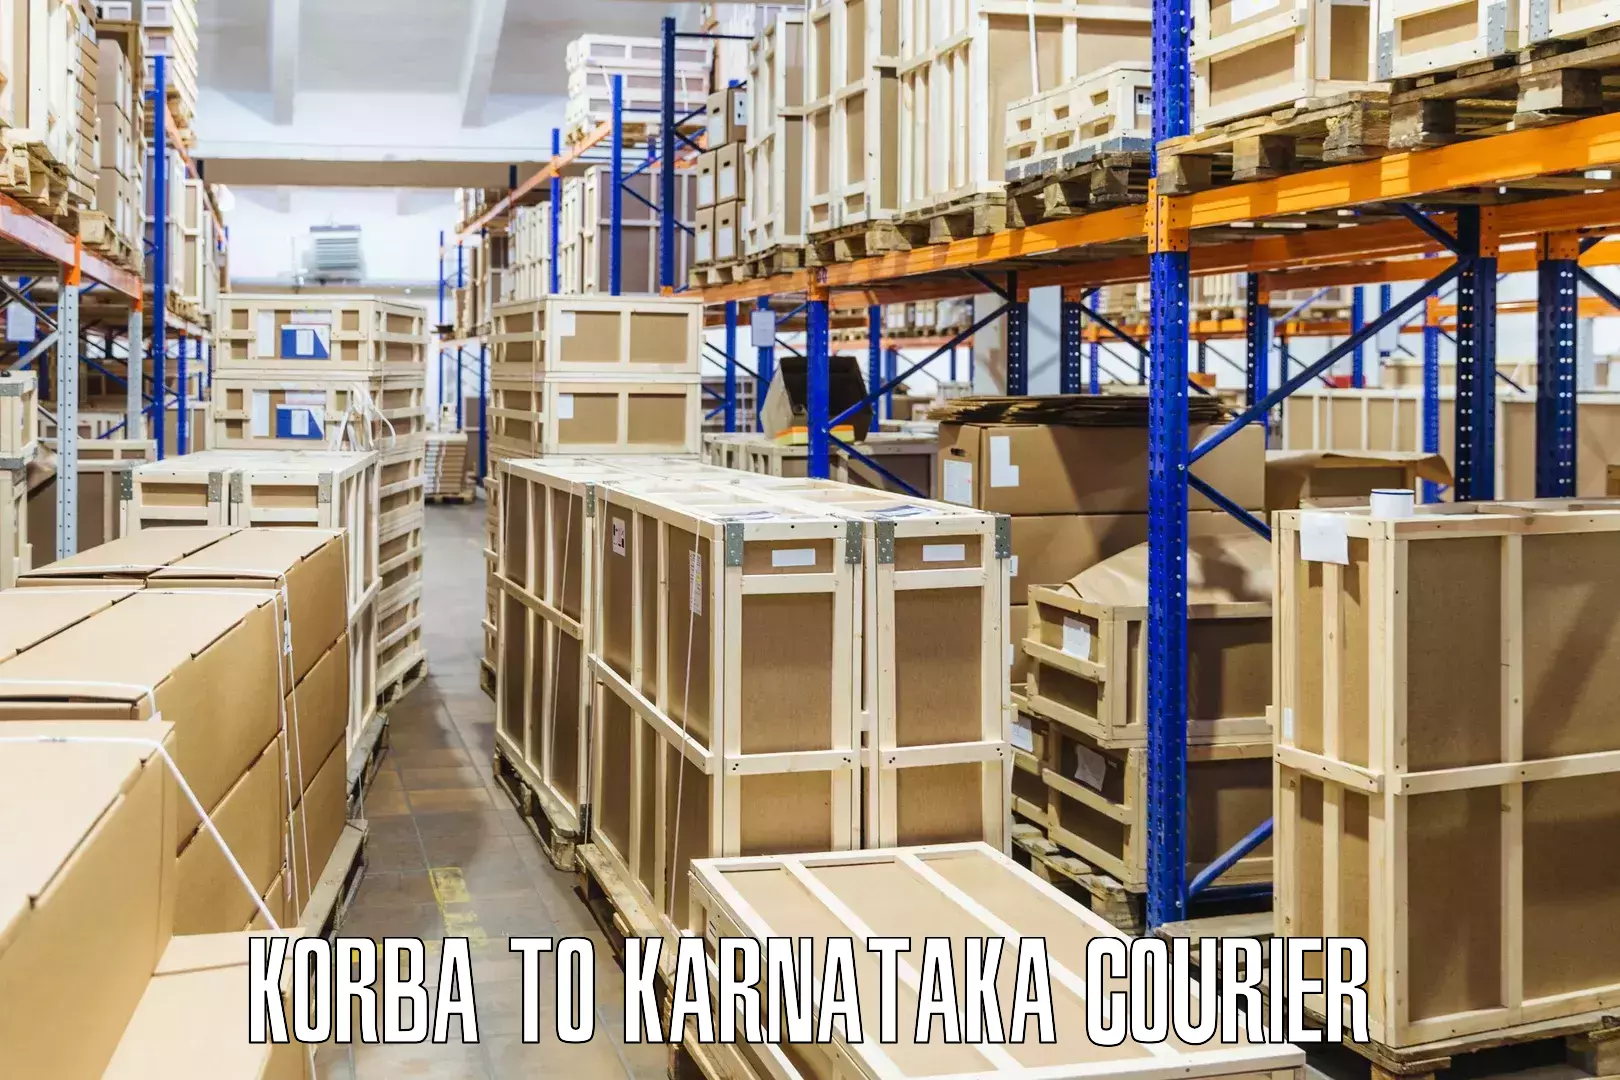 Express logistics providers Korba to Jagalur